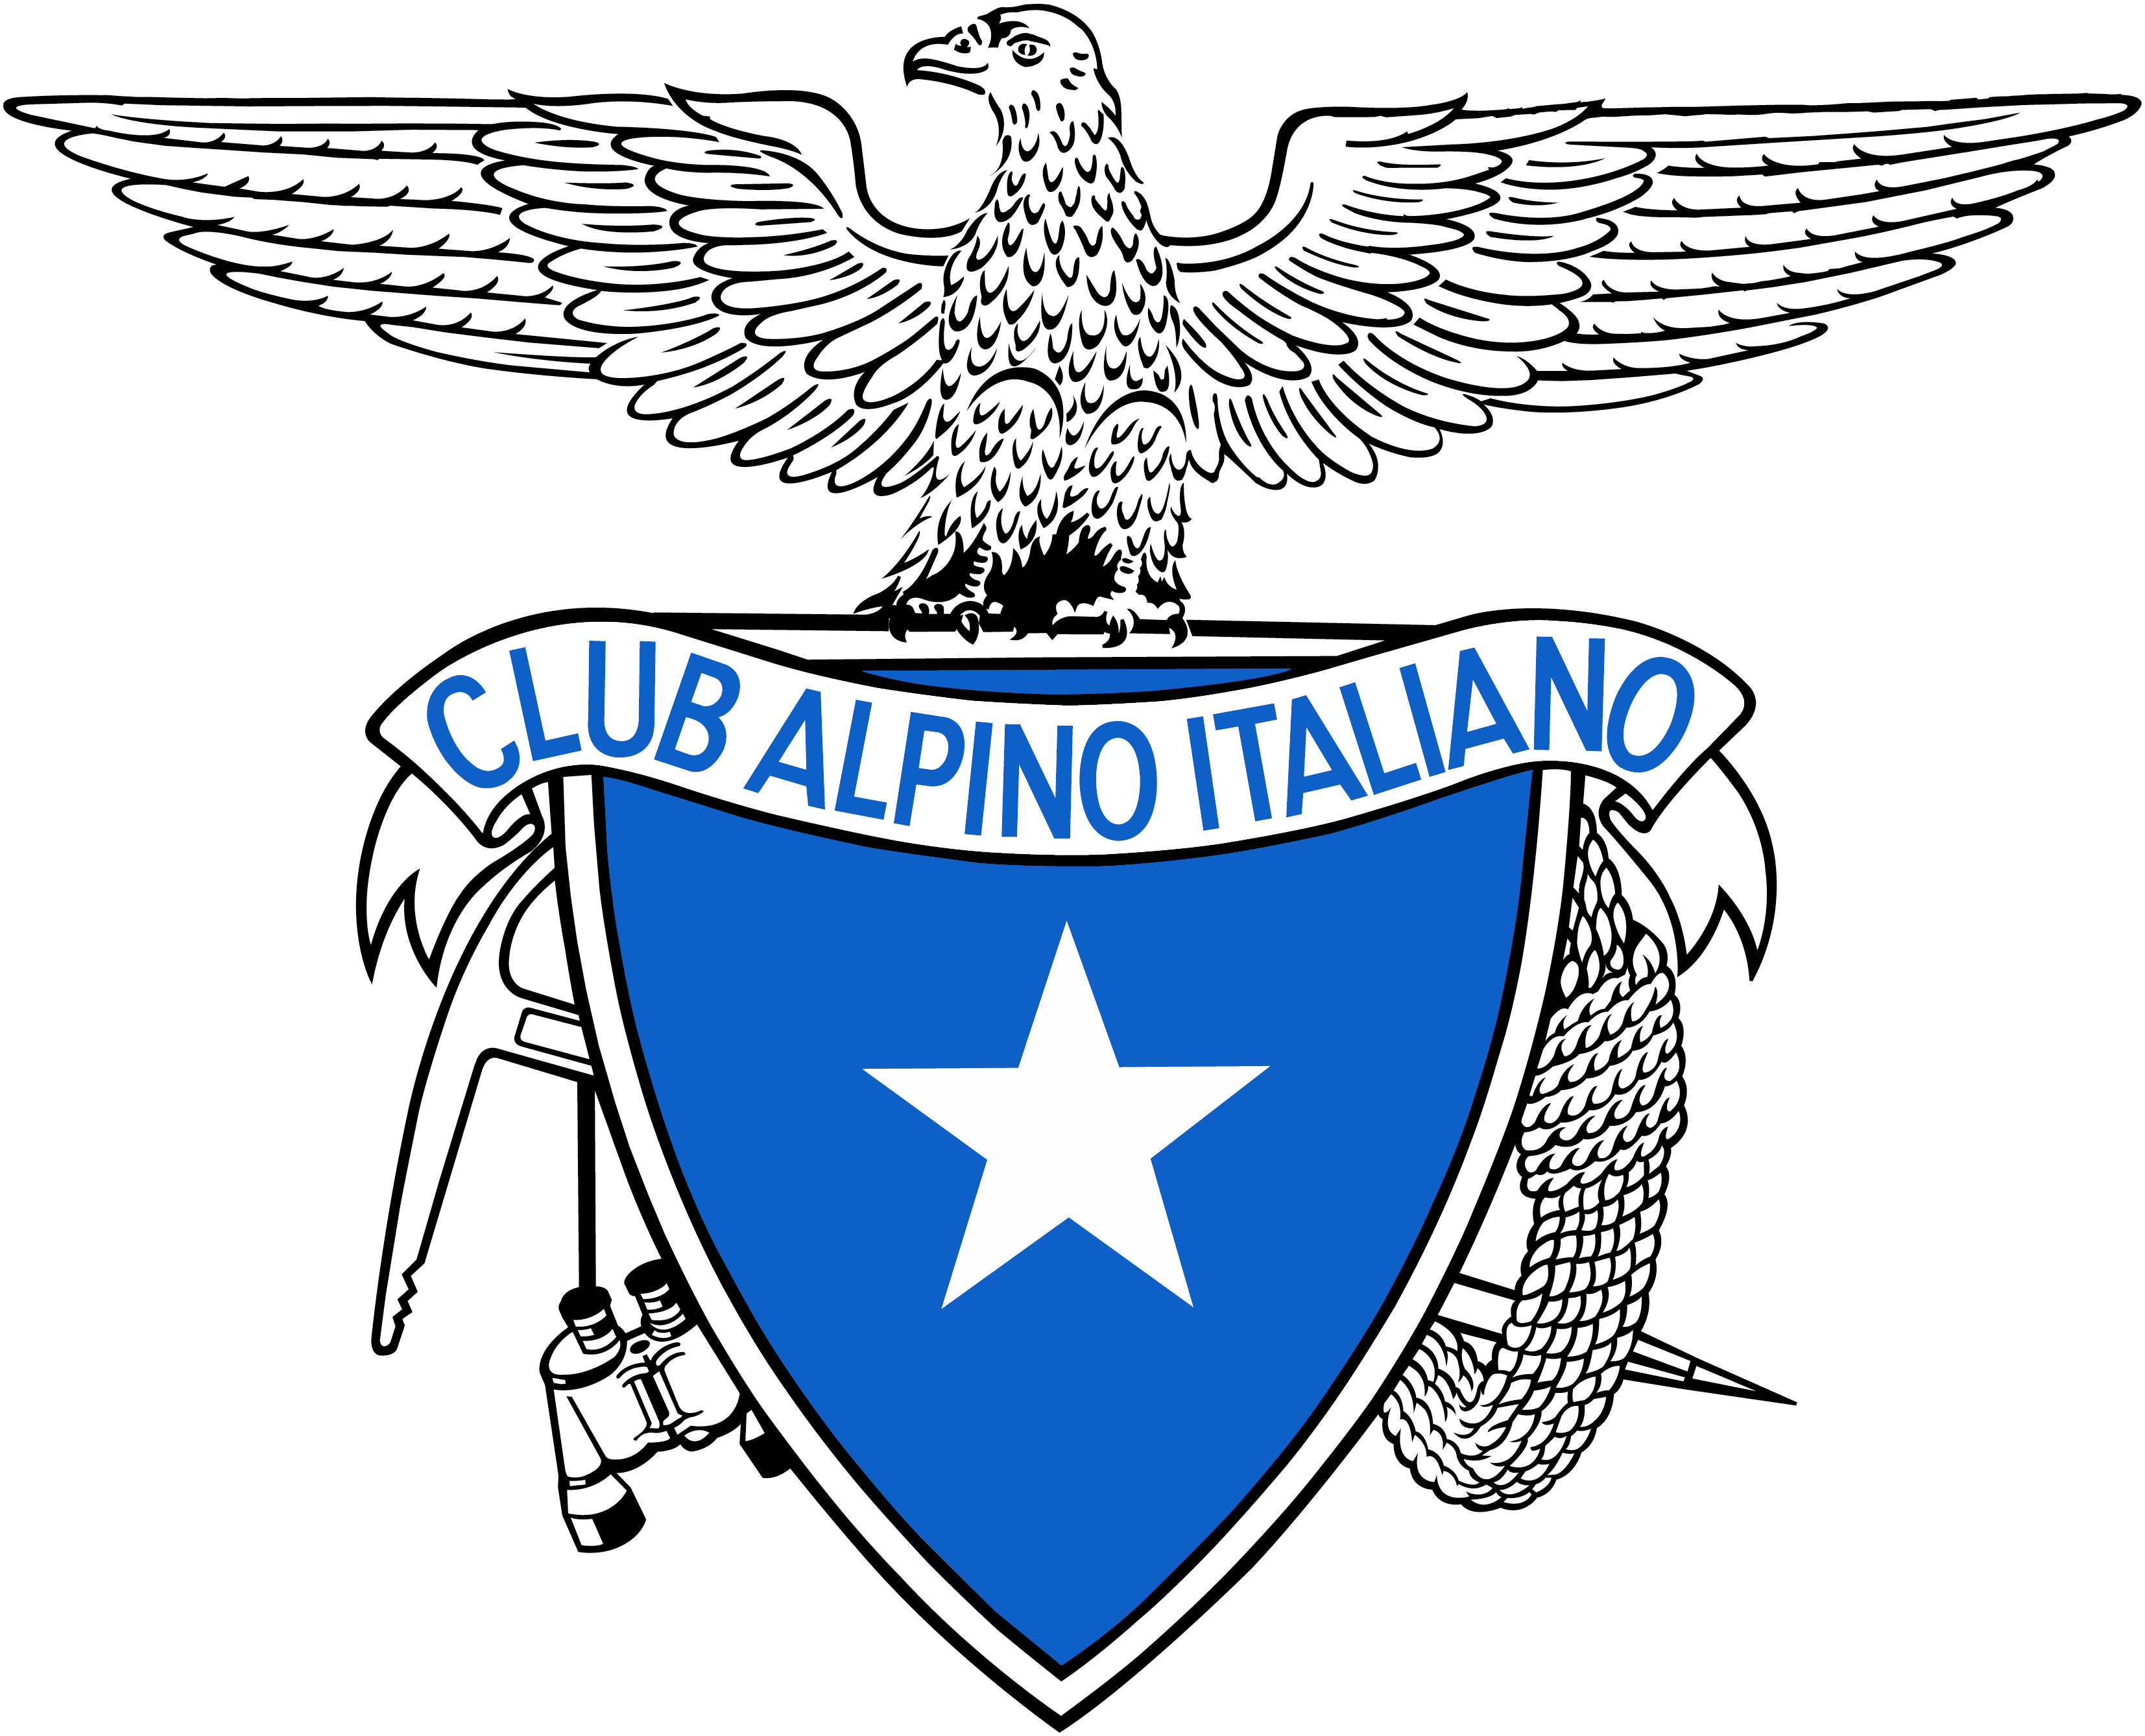 Cai Logo - File:Cai Club Alpino Italiano Stemma.png - Wikimedia Commons